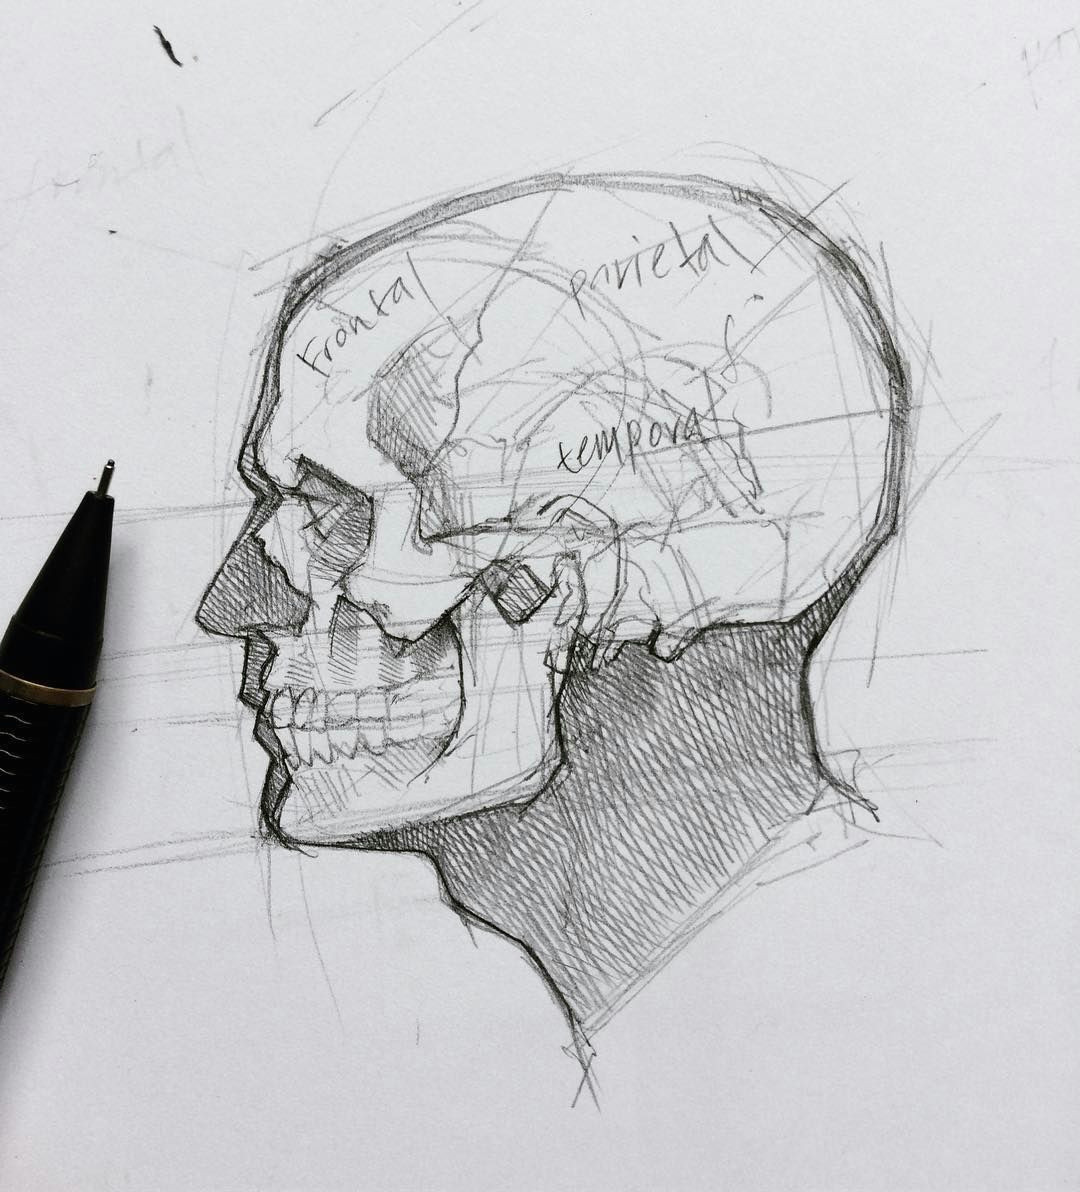 Skull Drawing Figure 4 641 Me Gusta 12 Comentarios Efrain Malo Maloart En Instagram